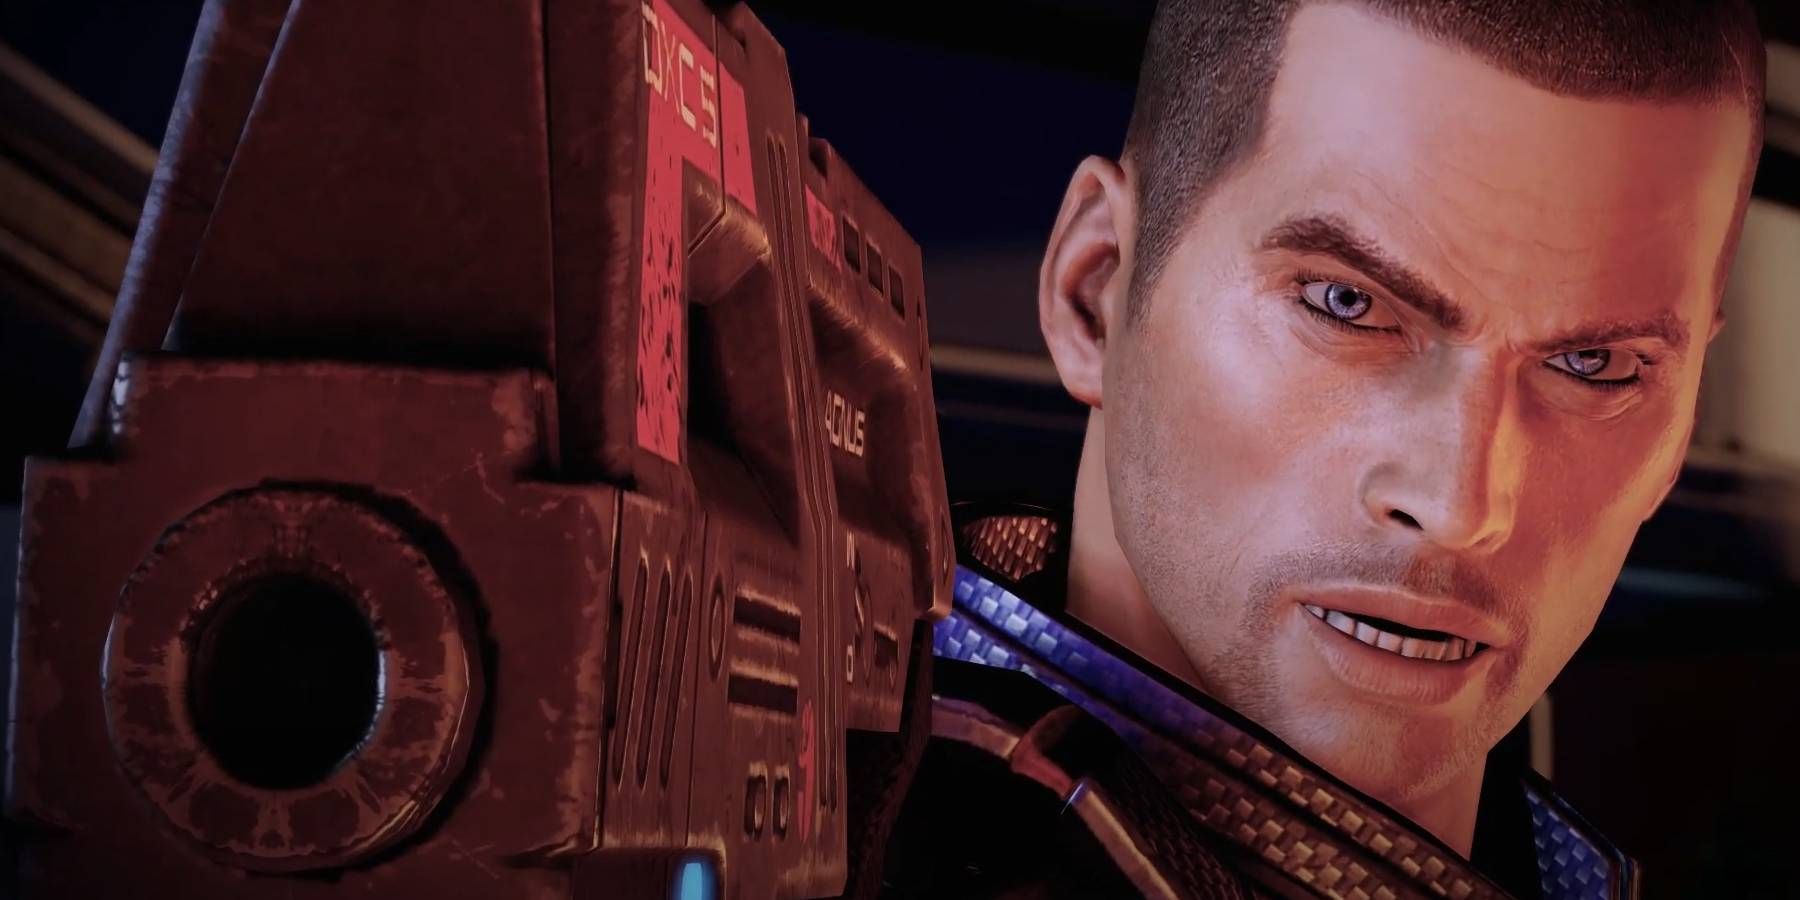 Mass Effect Commander Shepard making a Renegade morality choice during dialogue